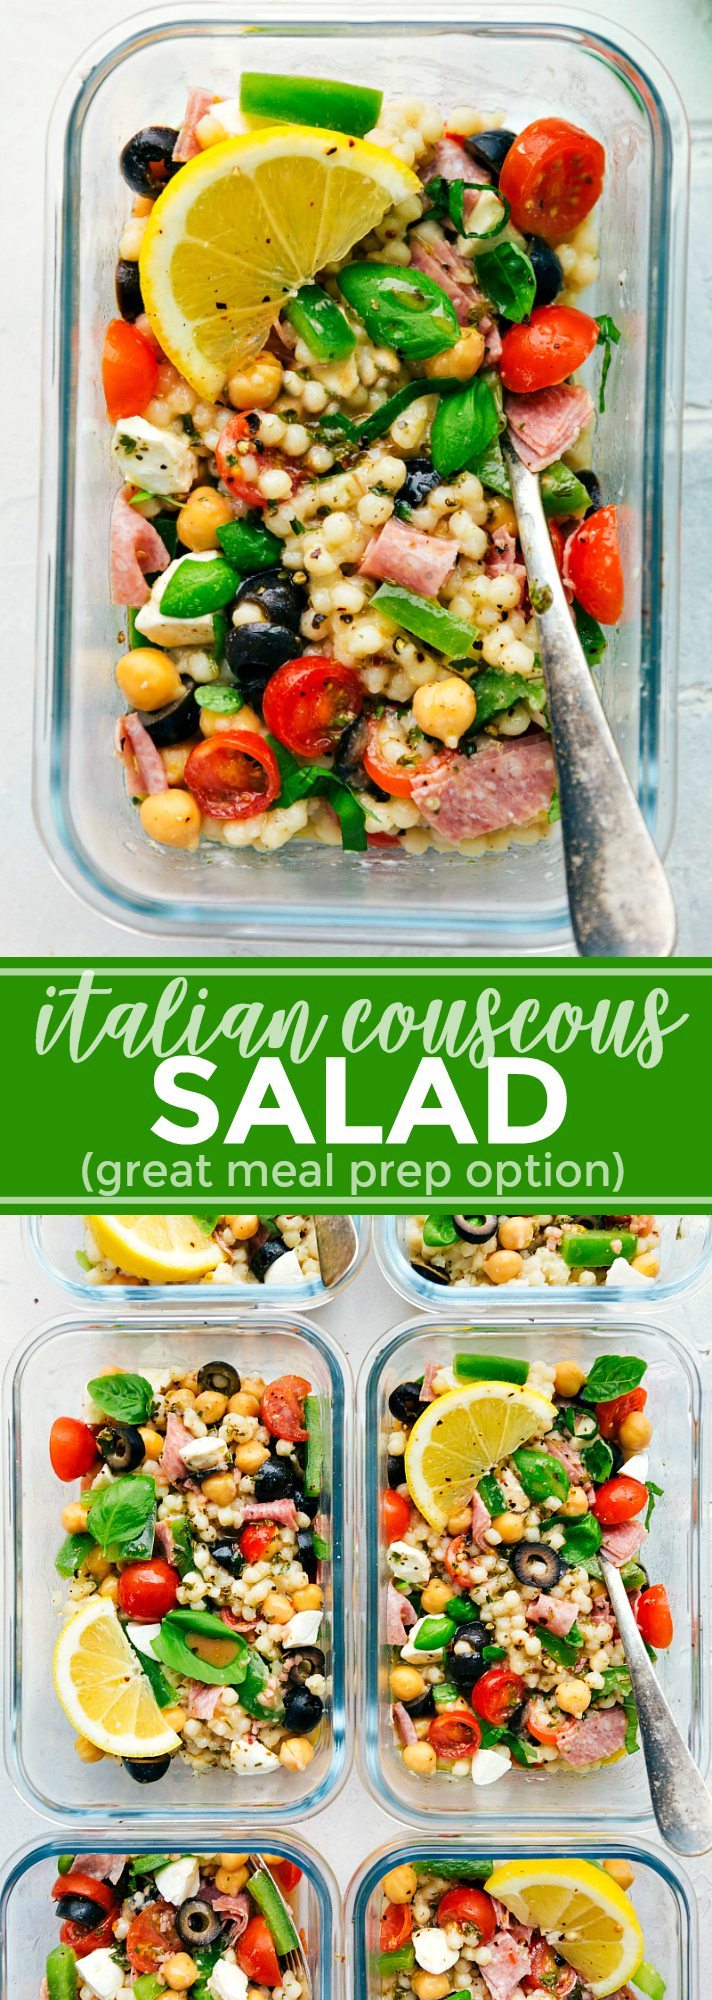 Italian Couscous Salad (Meal Prep Option) - Chelsea's Messy Apron